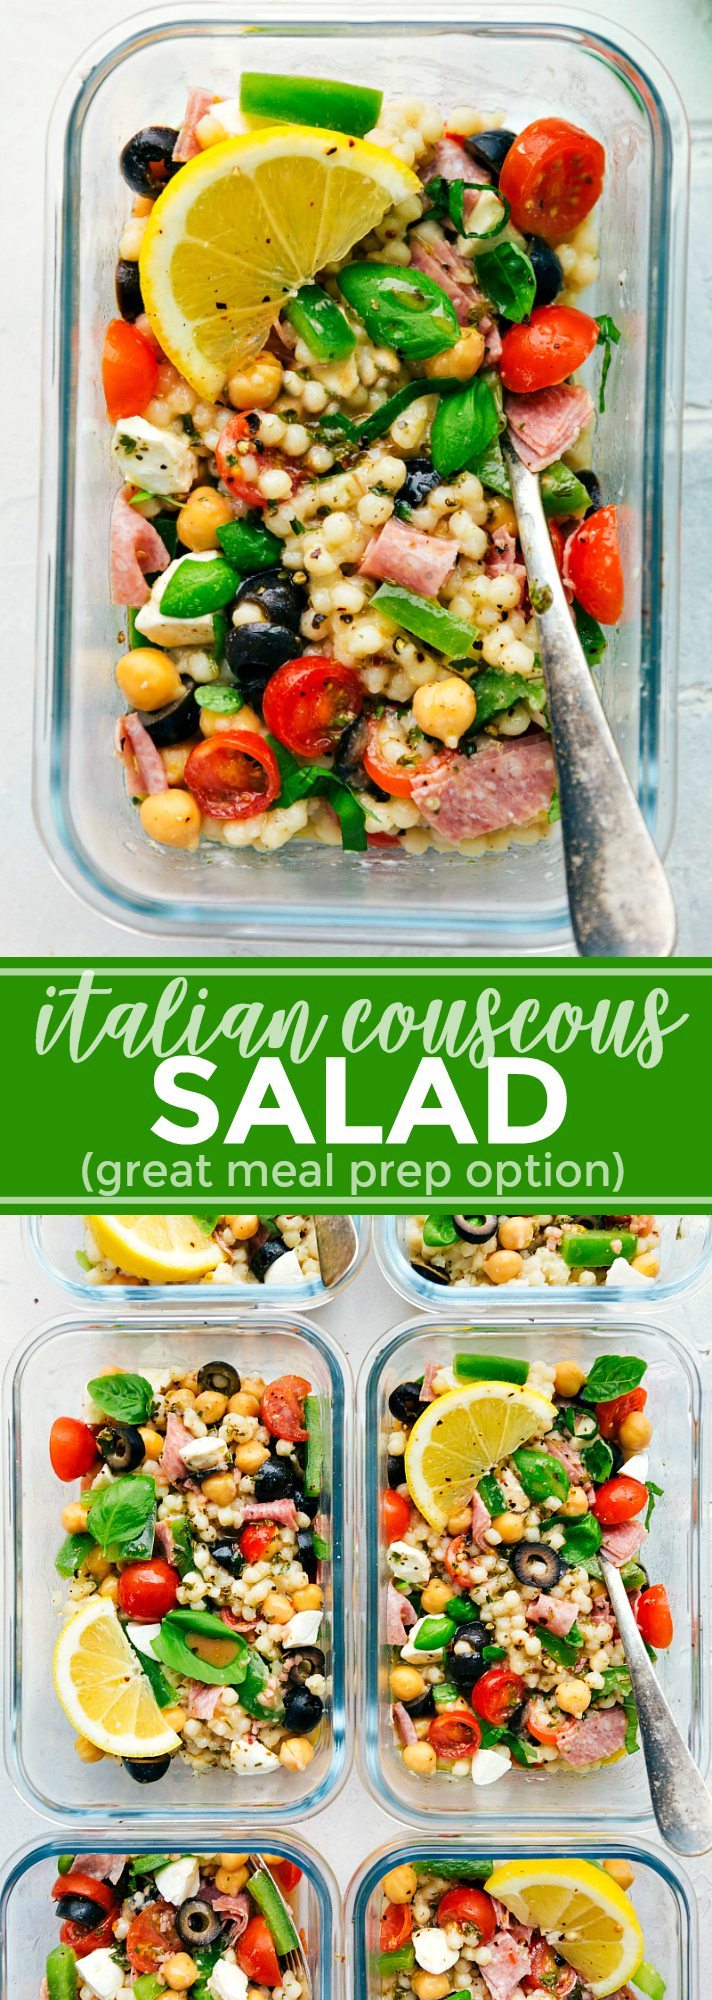 Italian Couscous Salad (Meal Prep Option) - Chelsea's Messy Apron